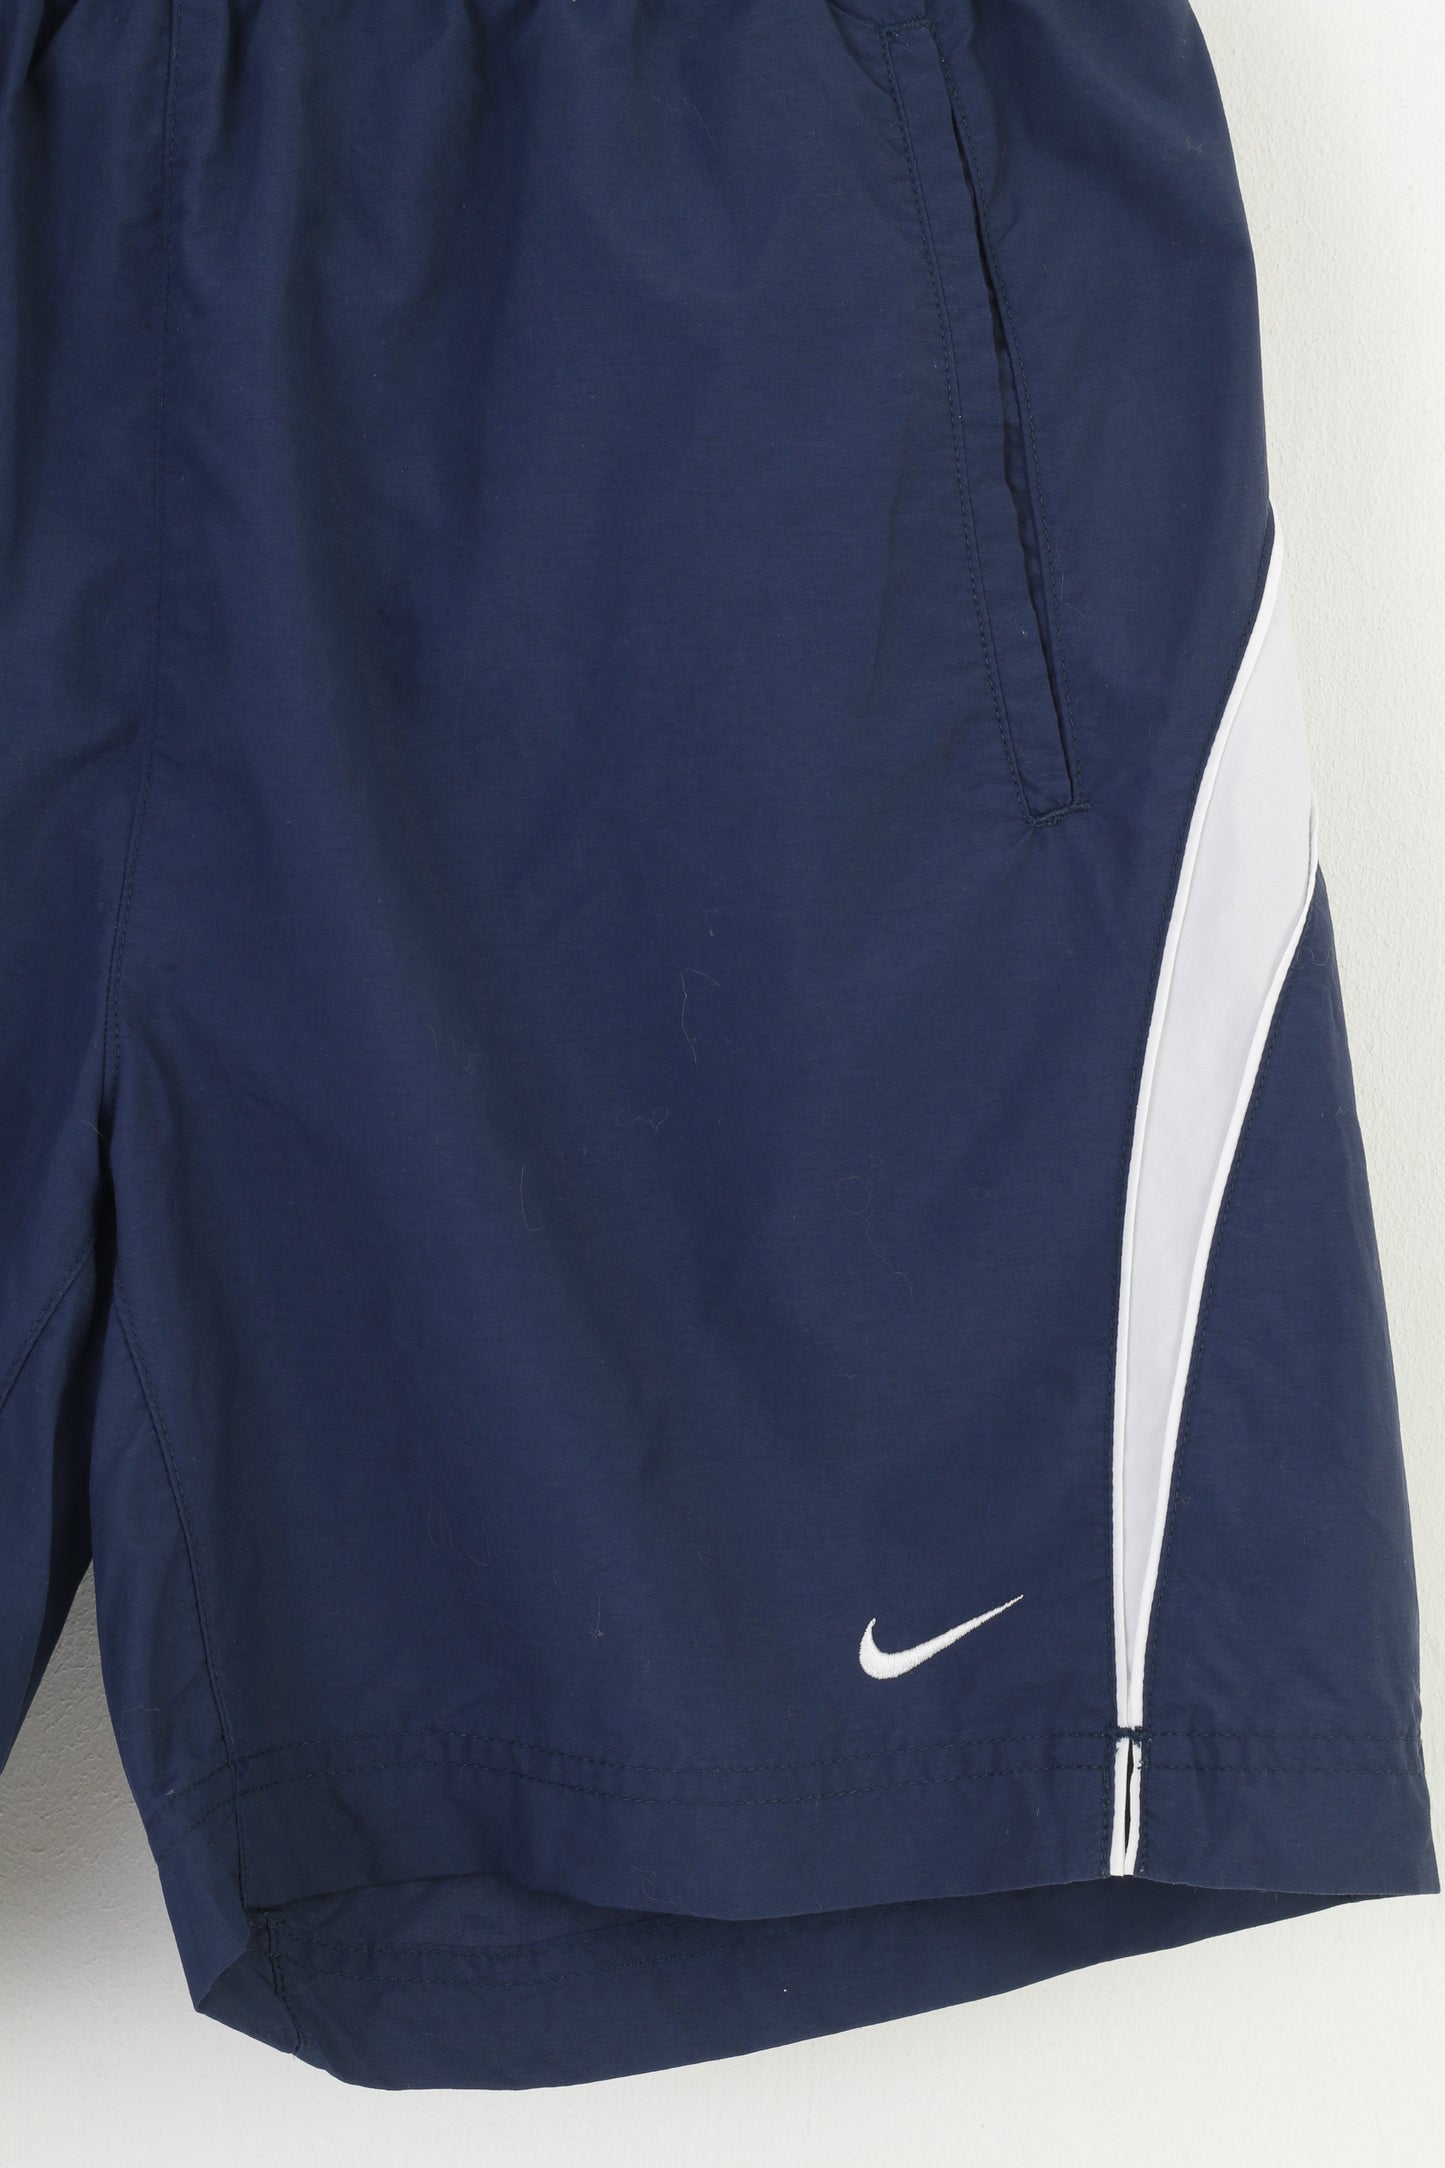 Nike Homme M 178 Short Bleu Marine Poches Taille Élastique Vintage Sportswear Active Training